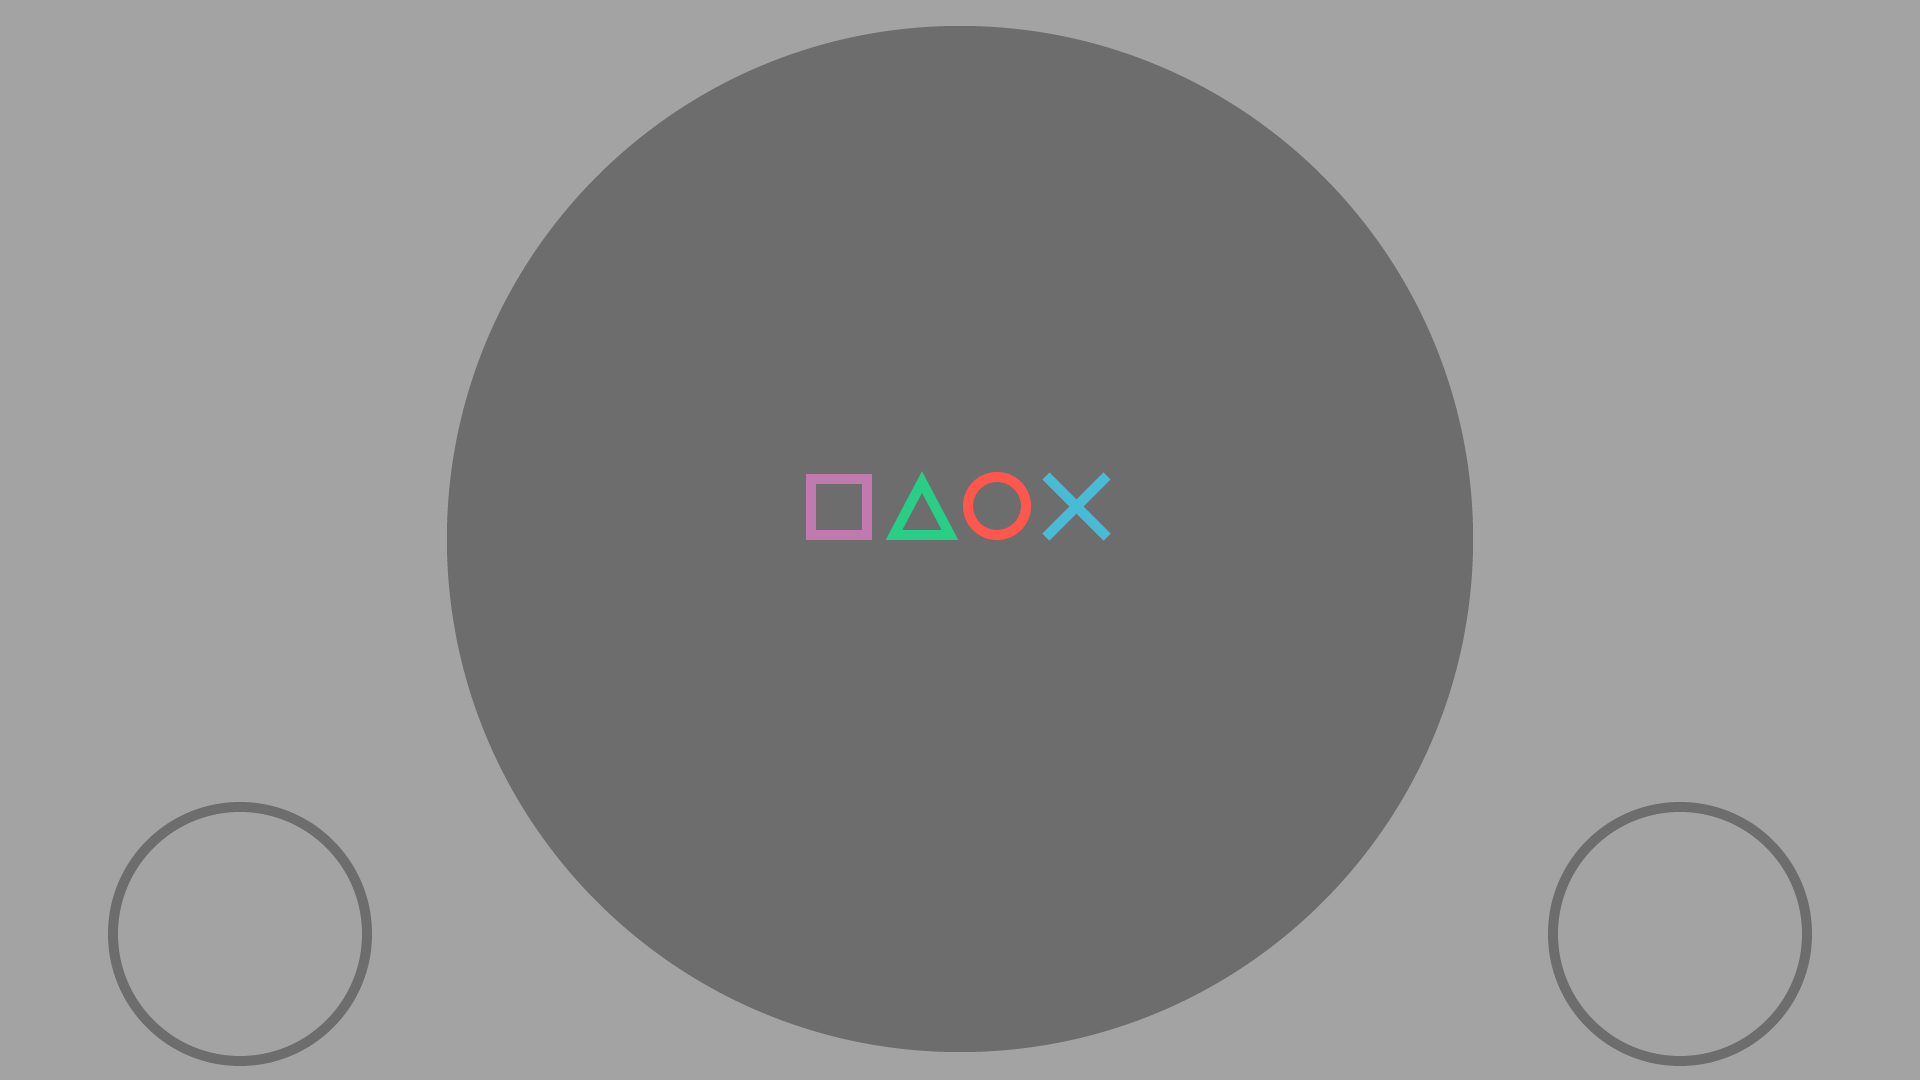 General 1920x1080 PlayStation Adobe Illustrator Sony gray minimalism video games